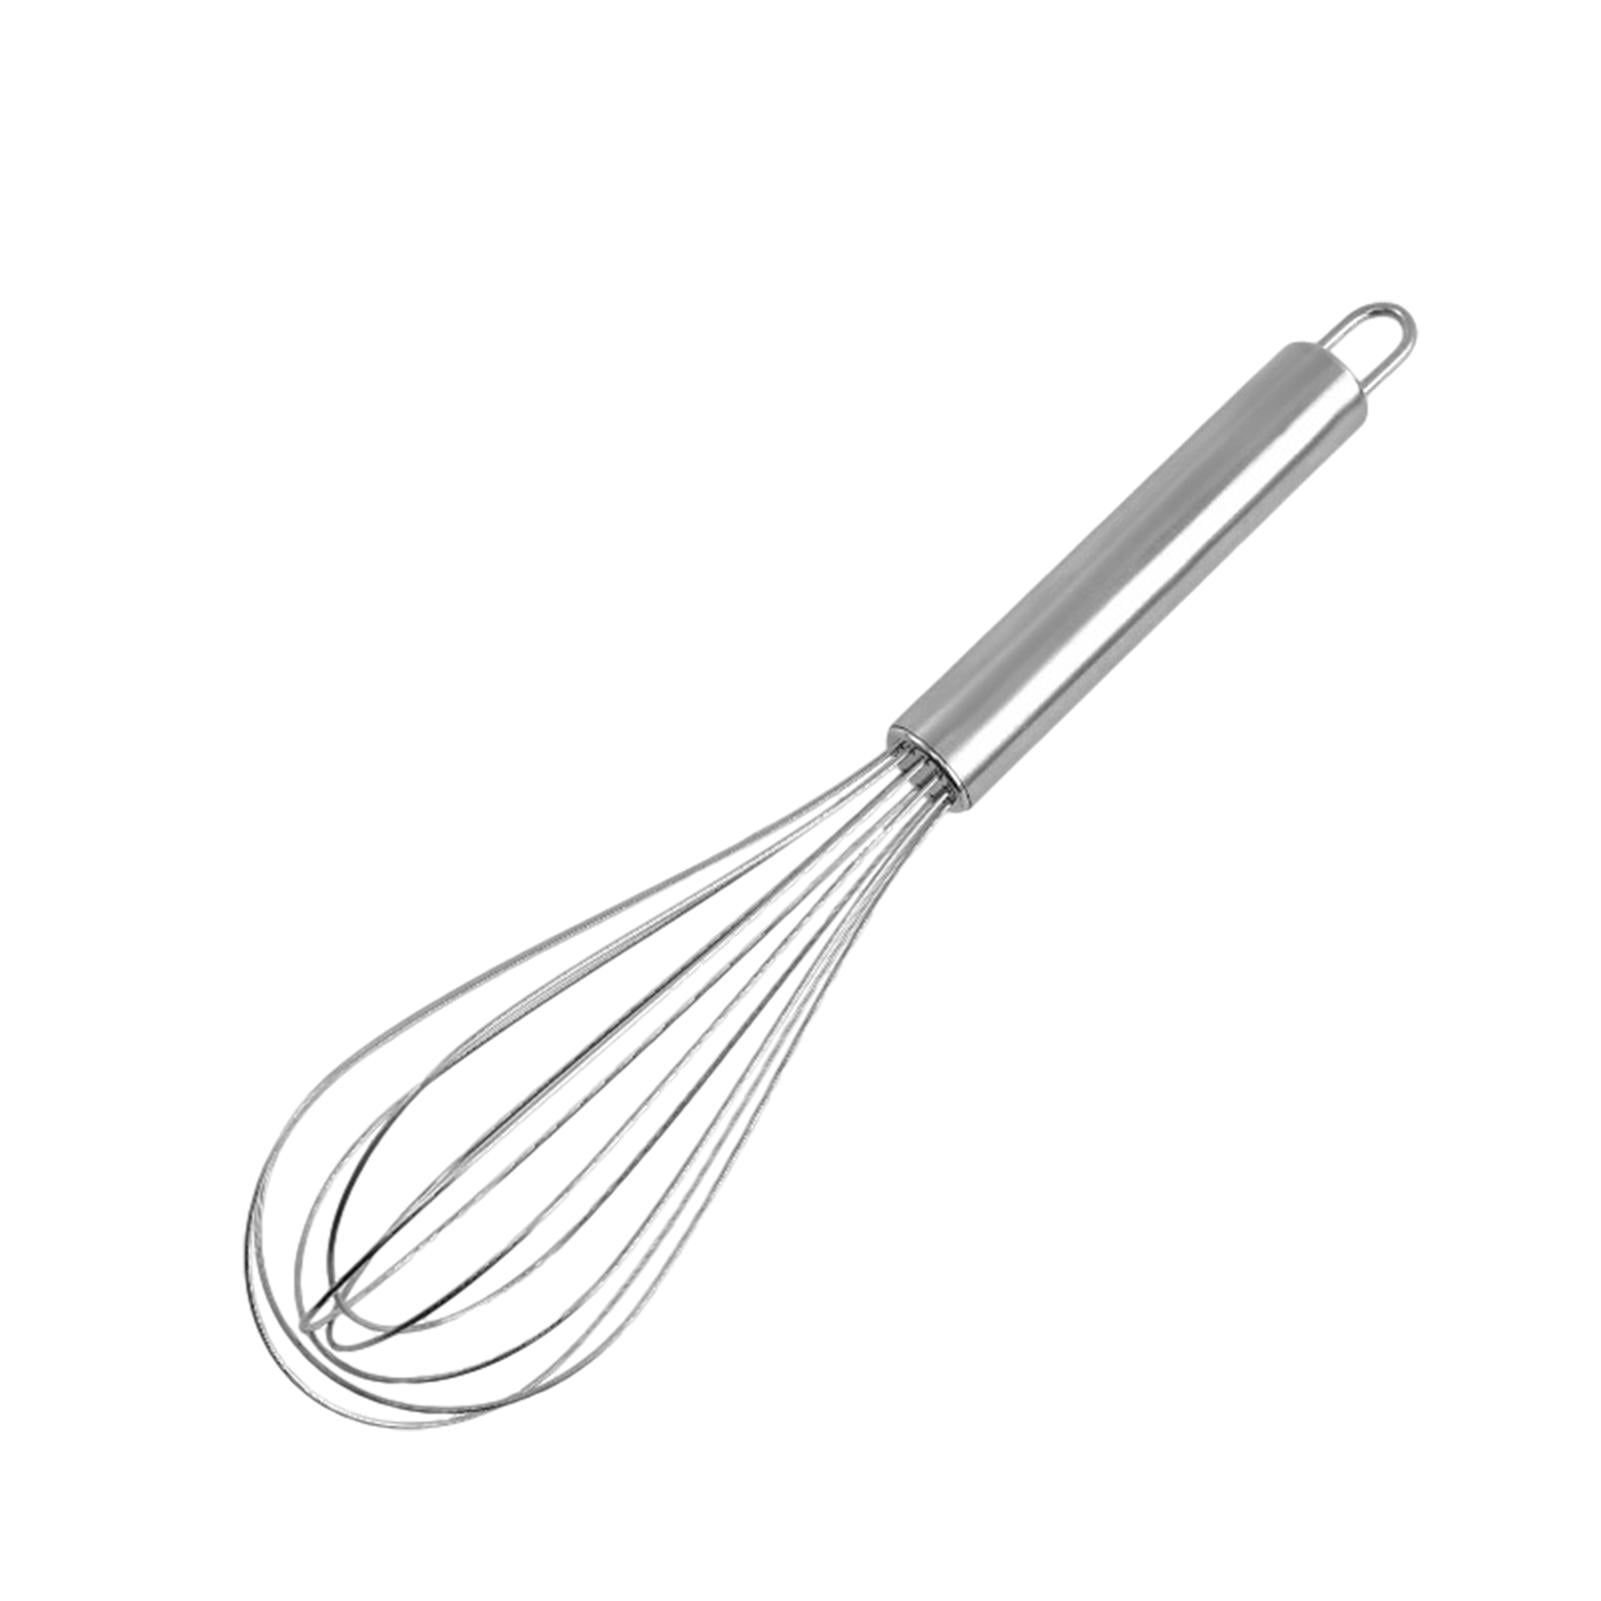 GIR: Get It Right Stainless Steel Whisk - Kitchen Balloon Wire Whisk for  Beating, Blending, Stirring - Mini - 8 IN, Sprinkles